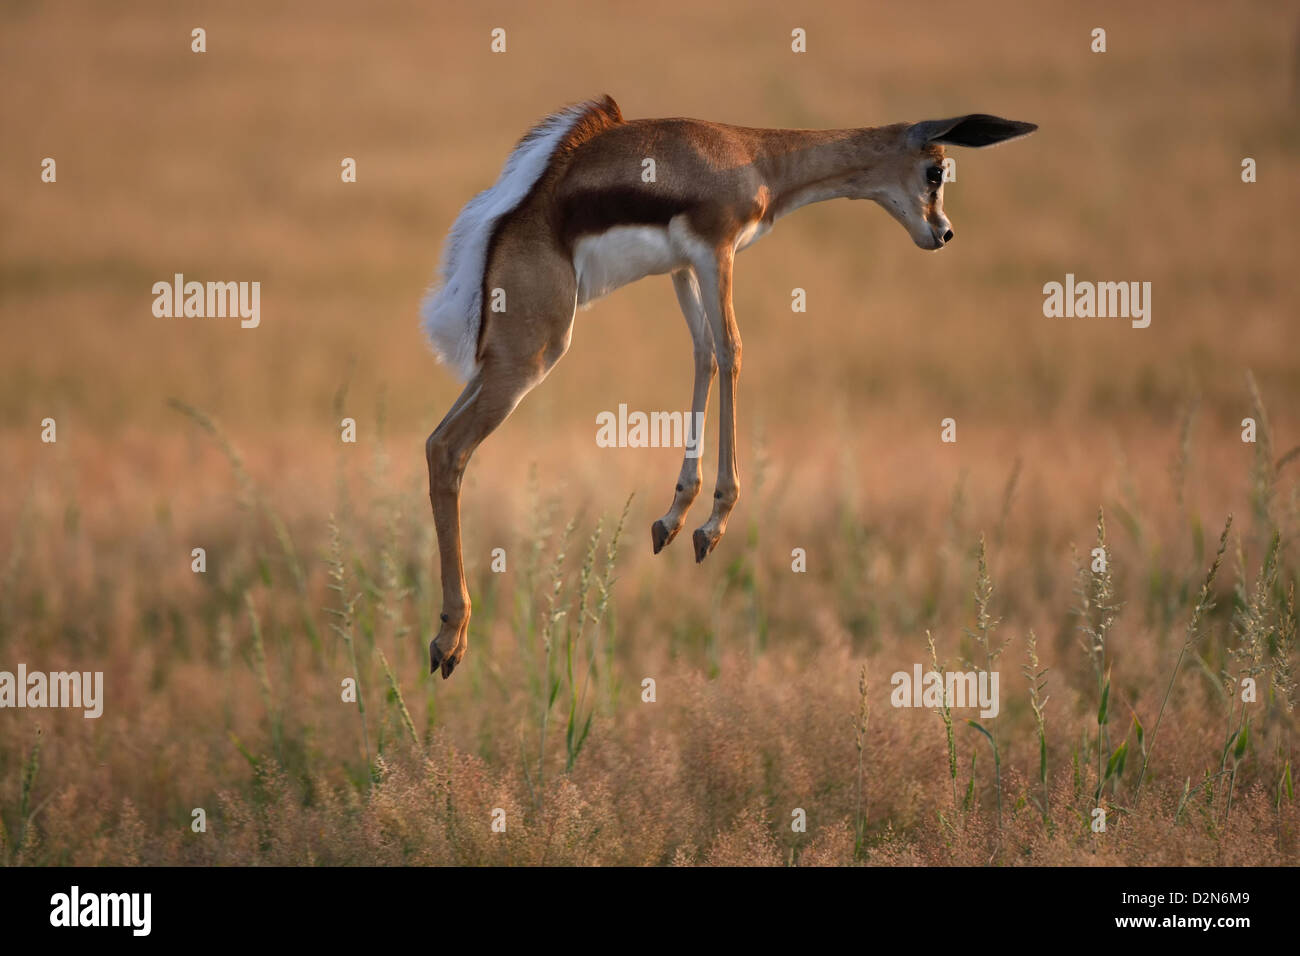 Young Springbock, springbuck, springbok, Antidorcas marsupiallis, marsupialis, Afrika, africa, pronking, jumping, Stock Photo